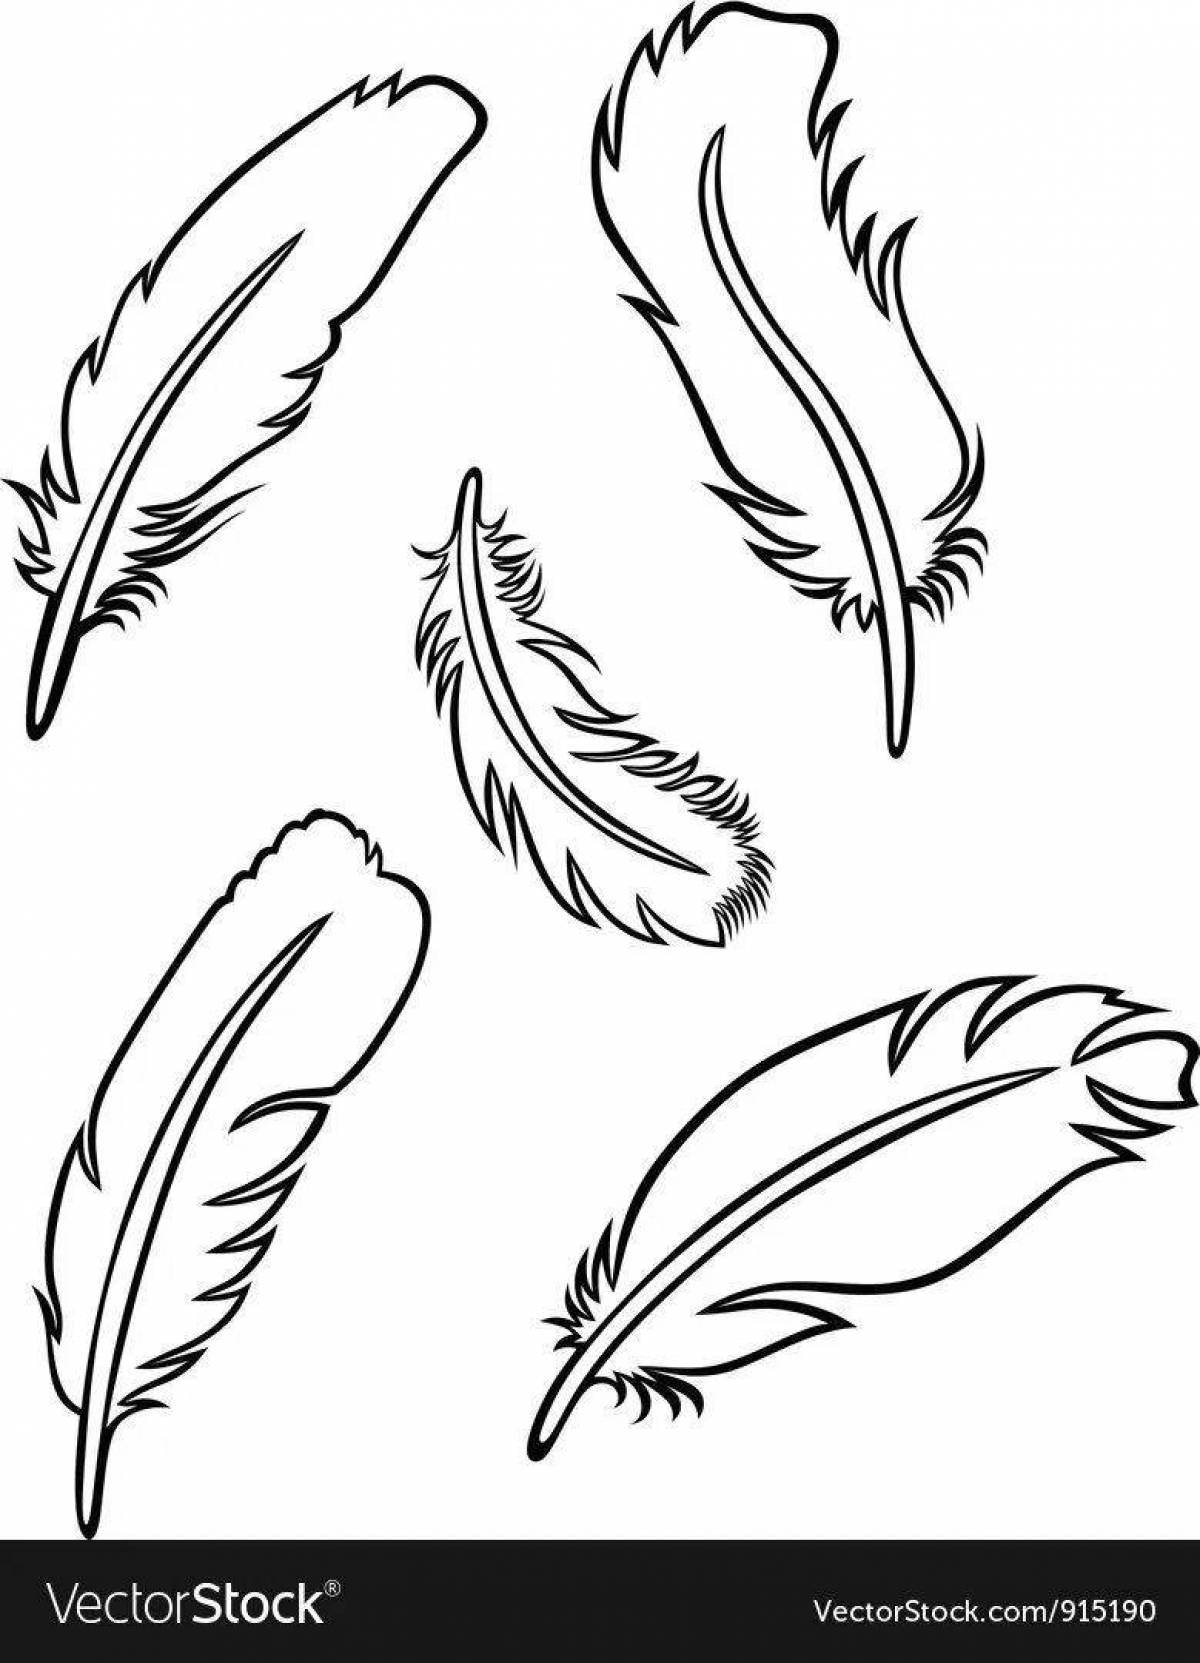 Раскраска с ярким рисунком перьев